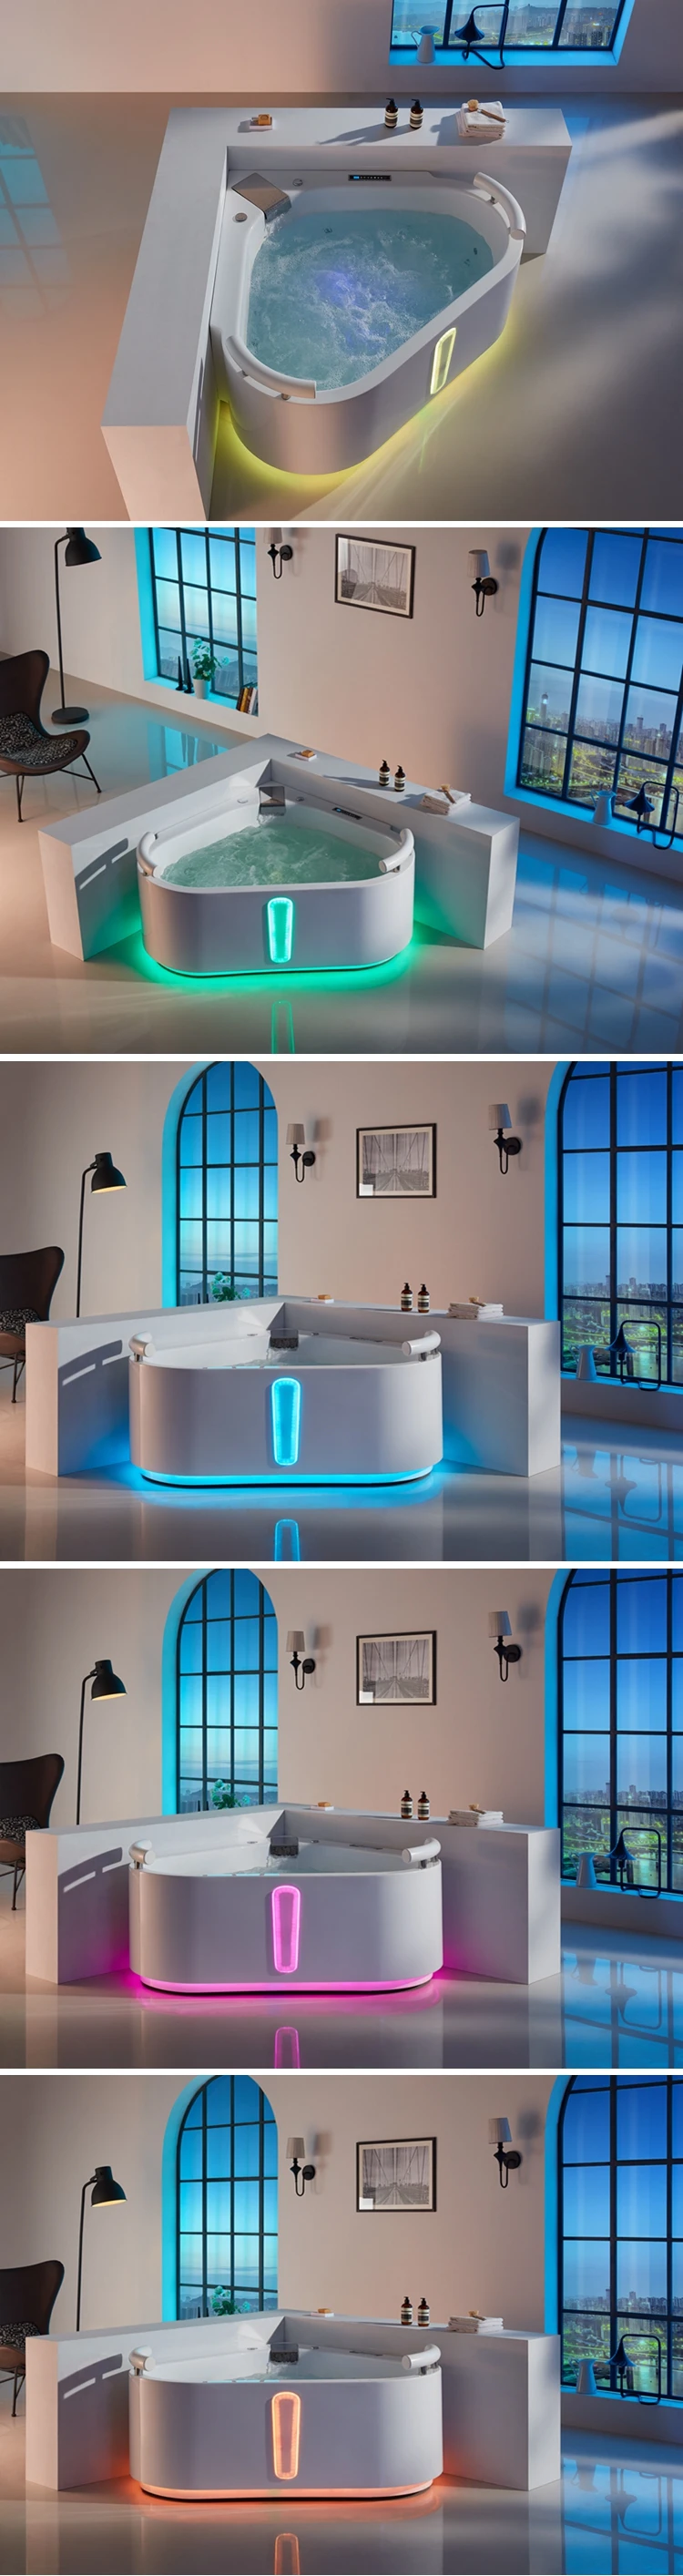 bathroom tub/bathtub whirlpool/bath tubs whirlpools